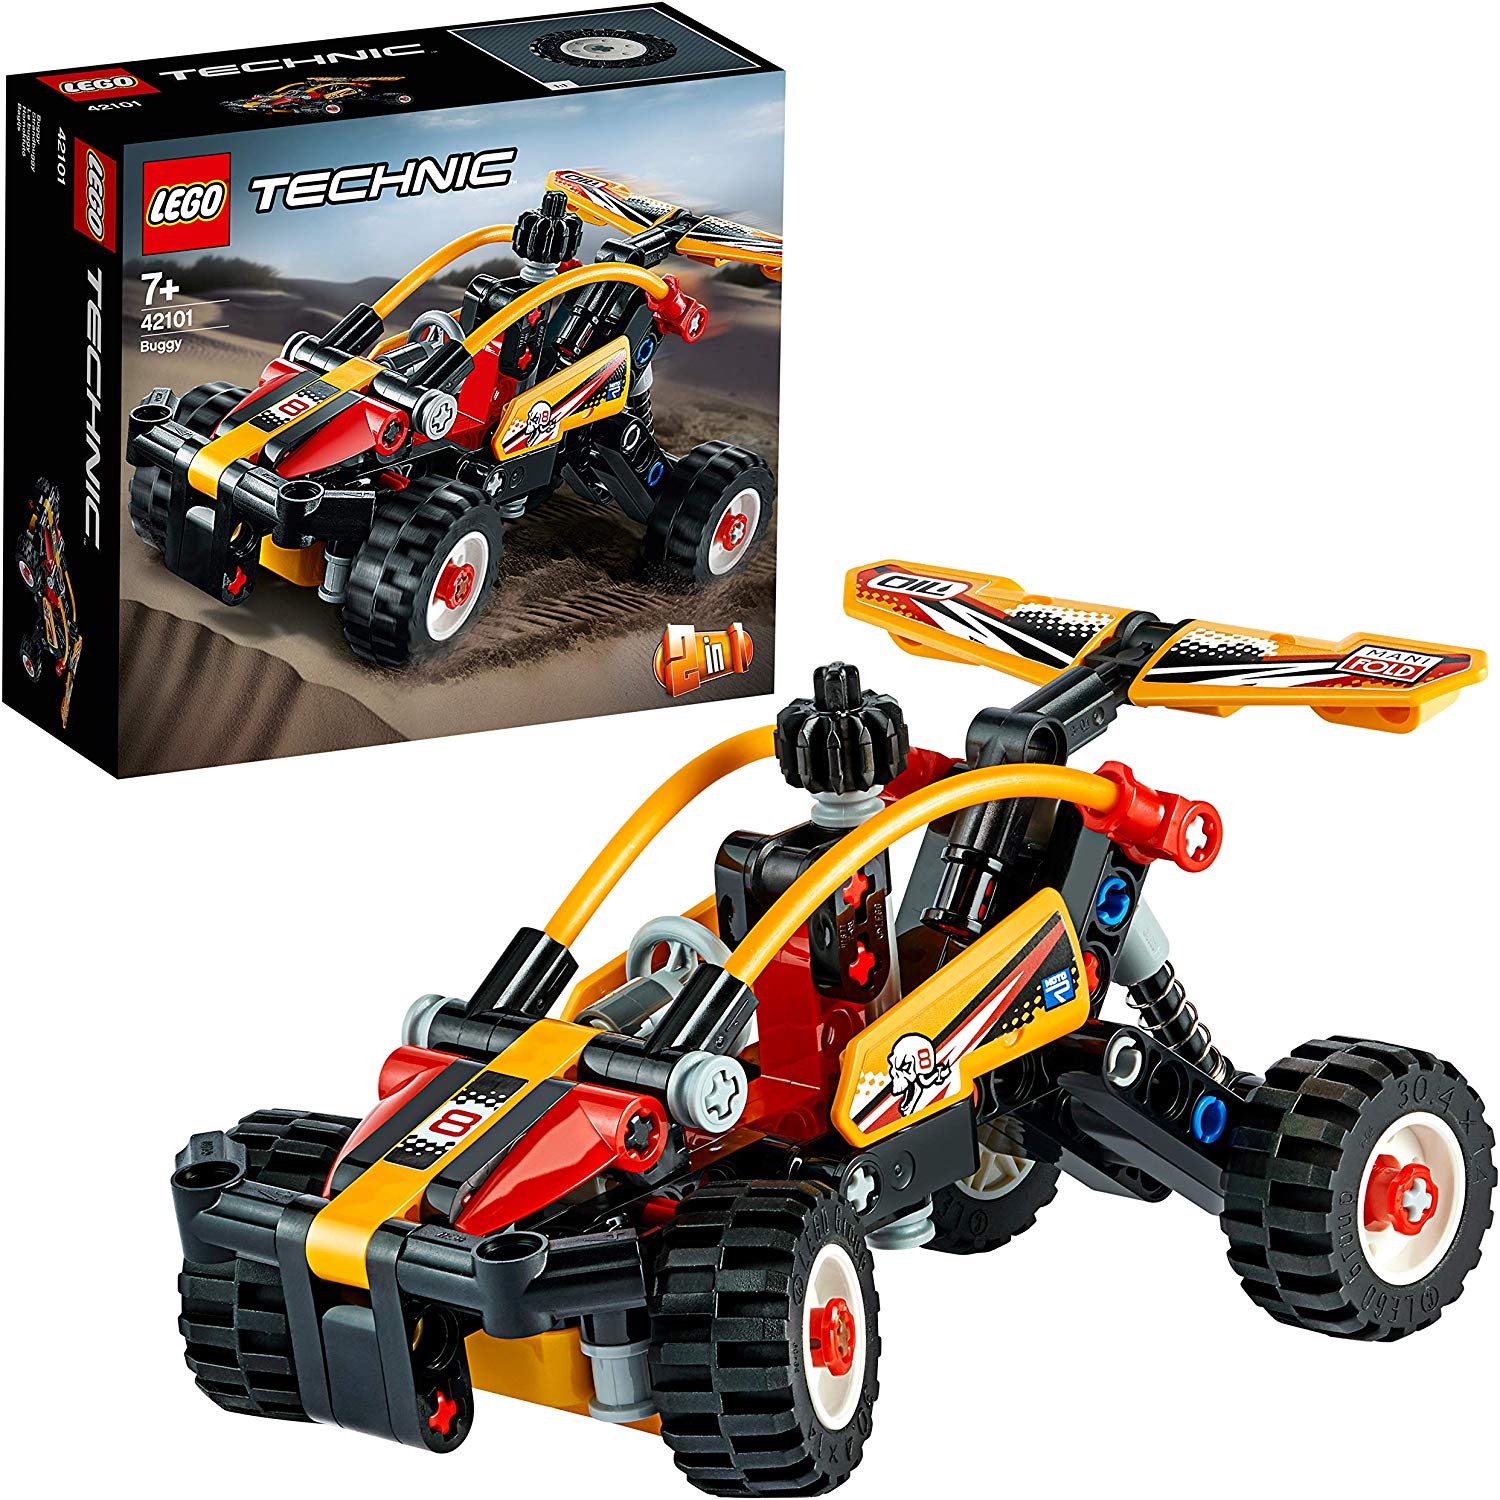 Honest Forwarder  Lego Technic 42101 Beach Buggy Construction Set